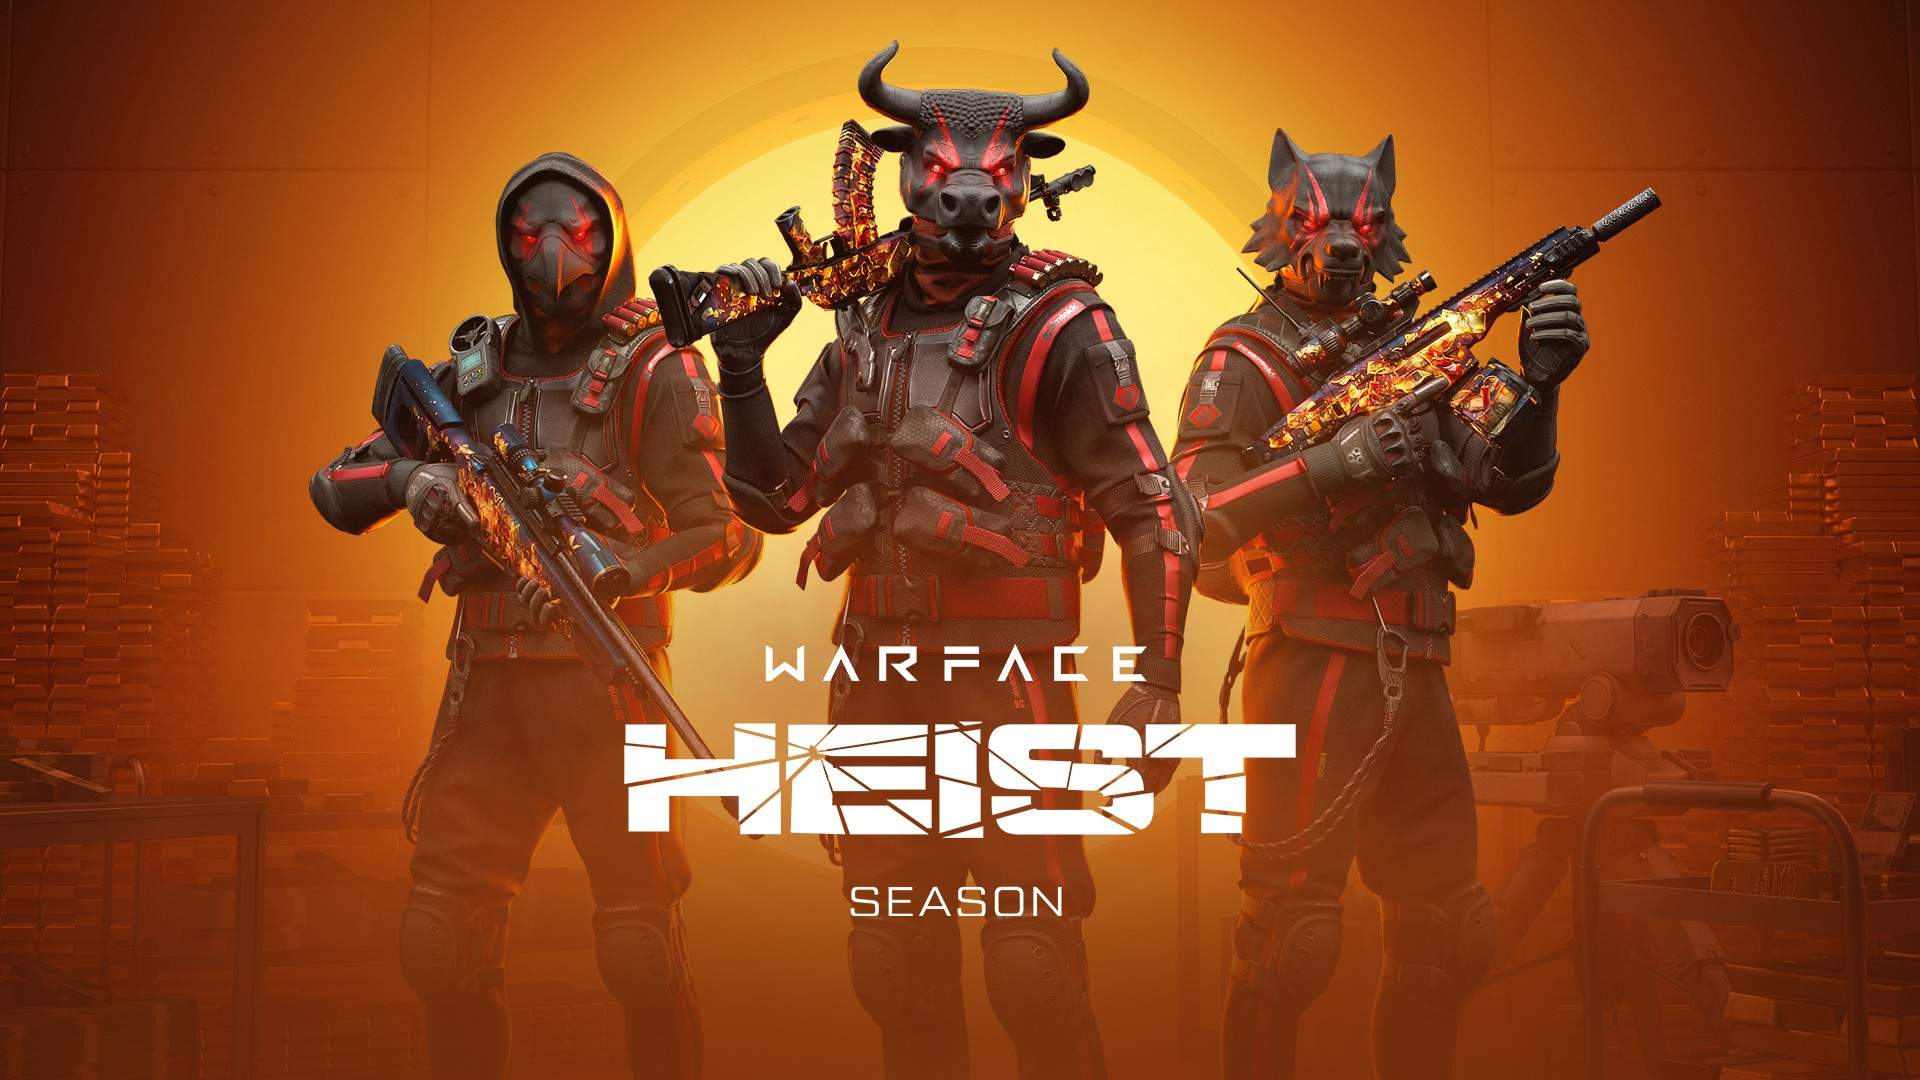 Warface: Heist